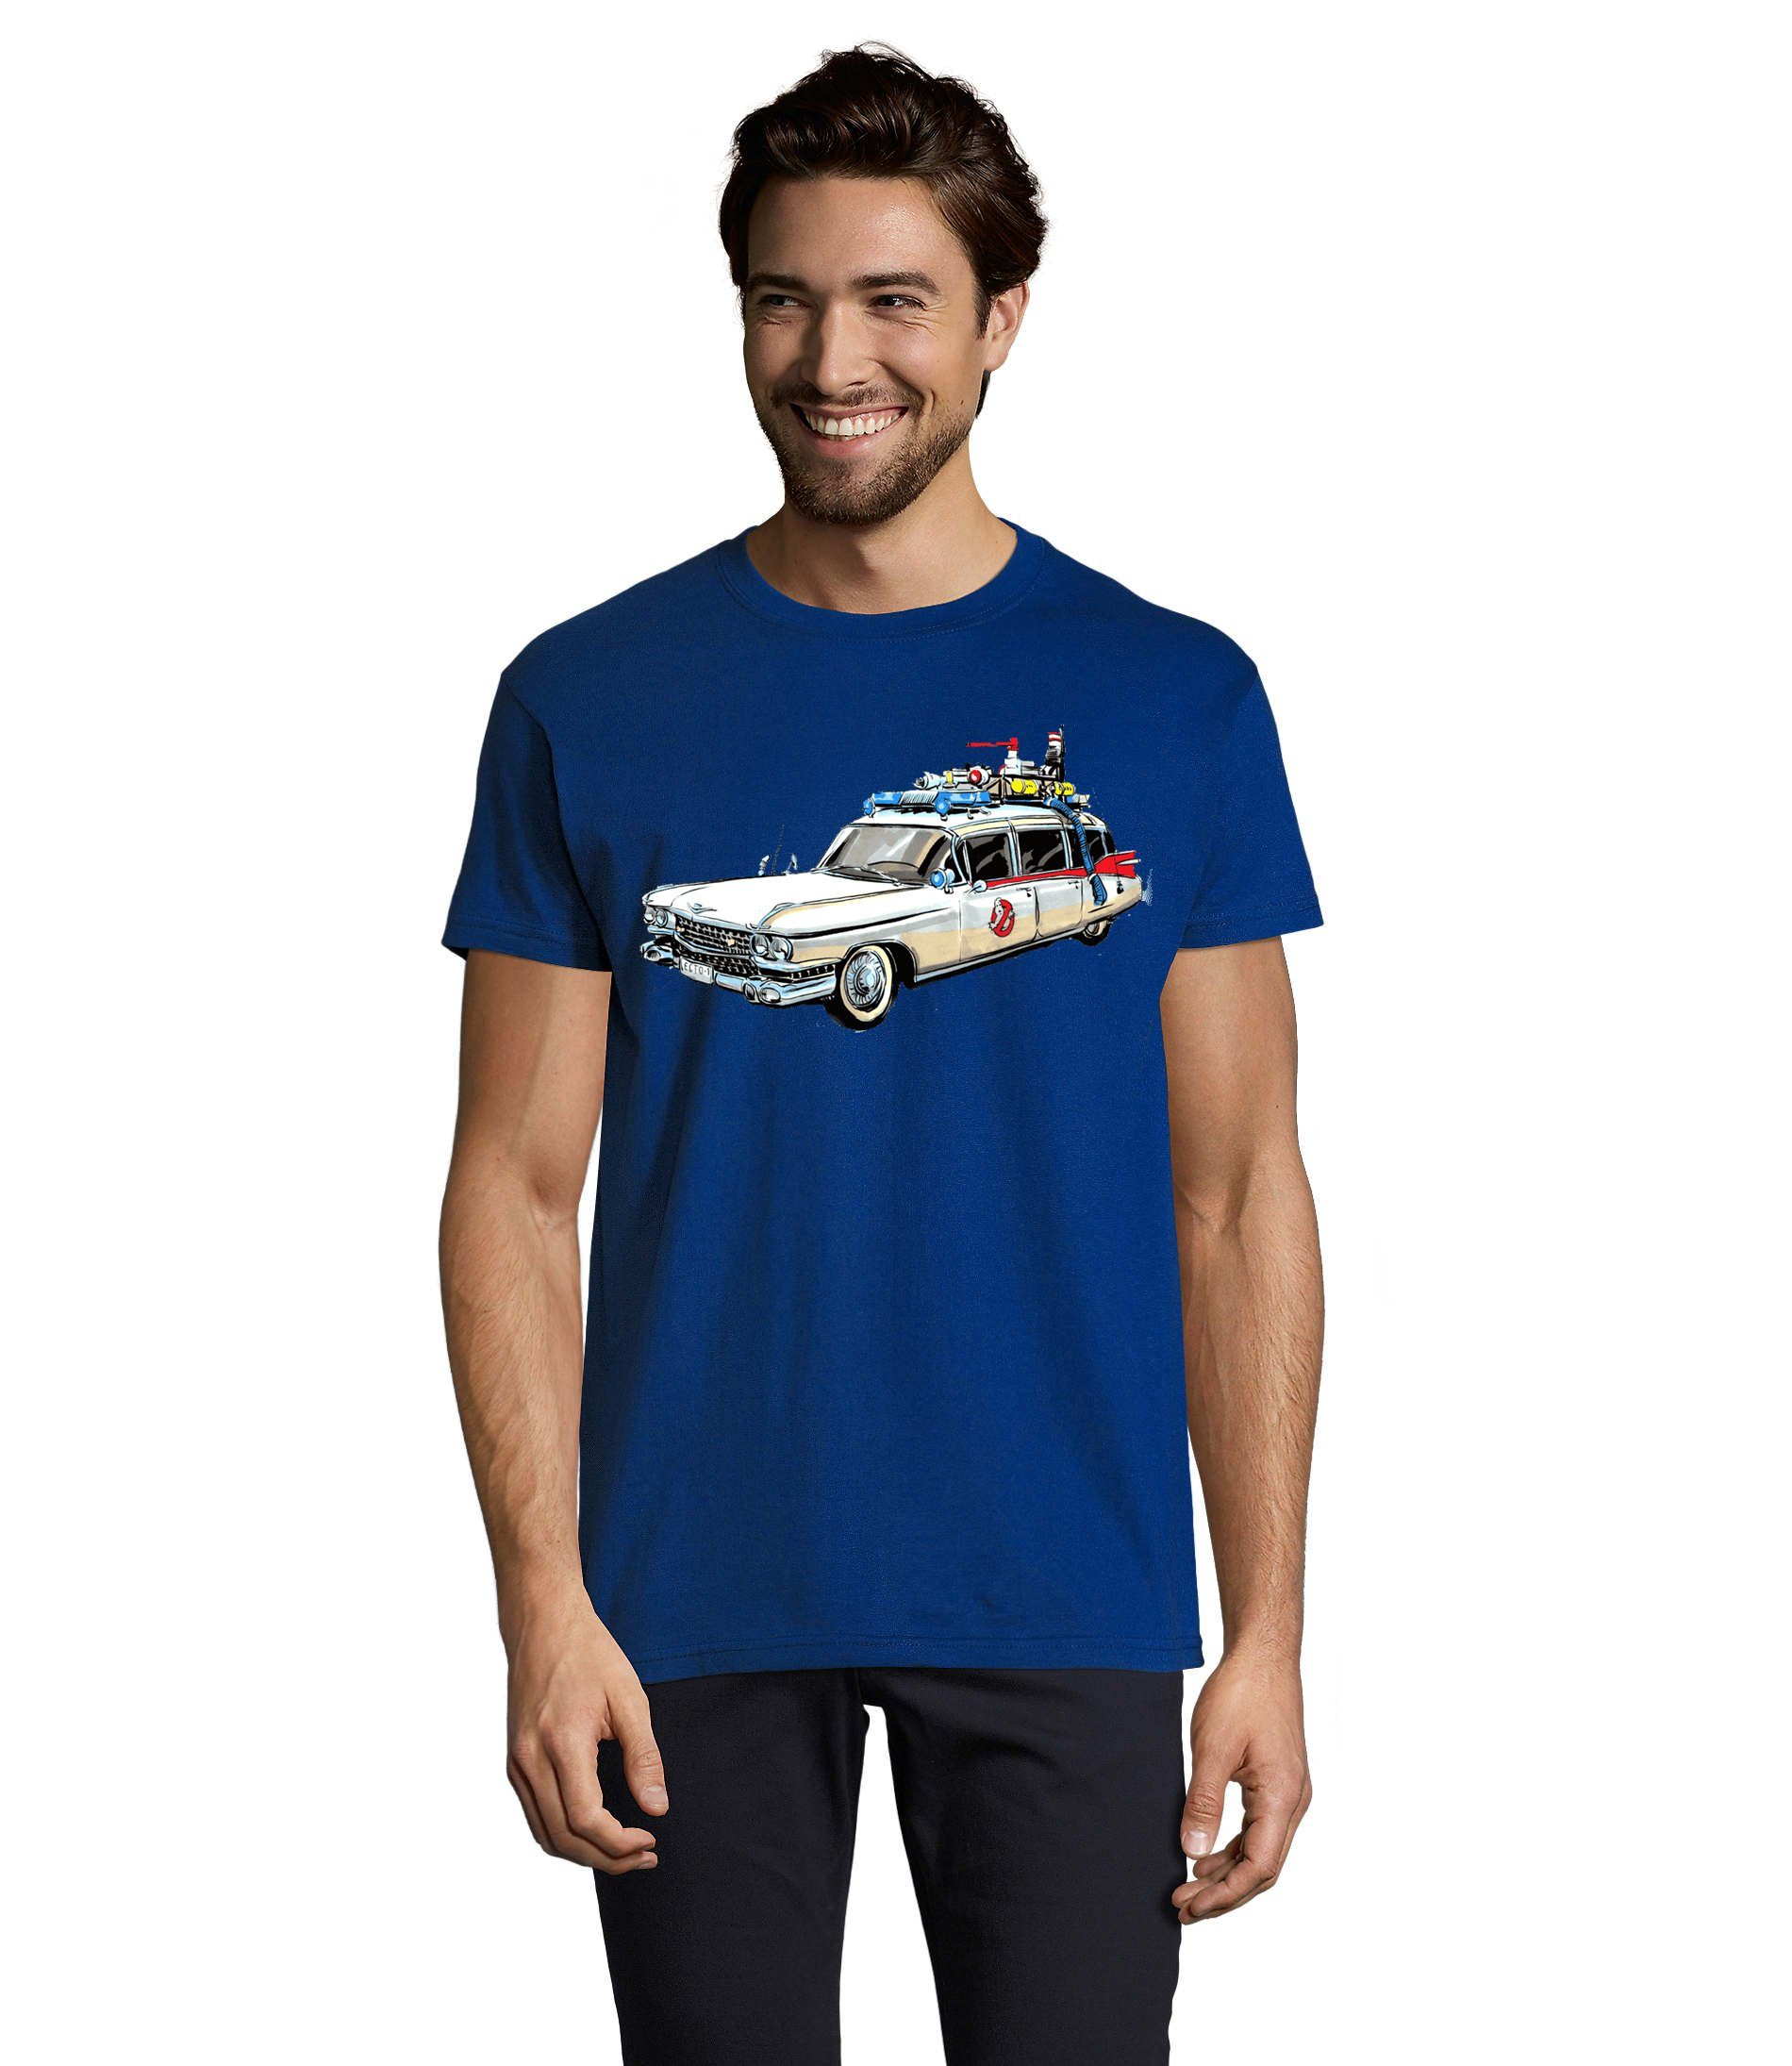 Blondie & Brownie T-Shirt Herren Ghostbusters Cars Auto Geisterjäger Geister Film Ghost Blau